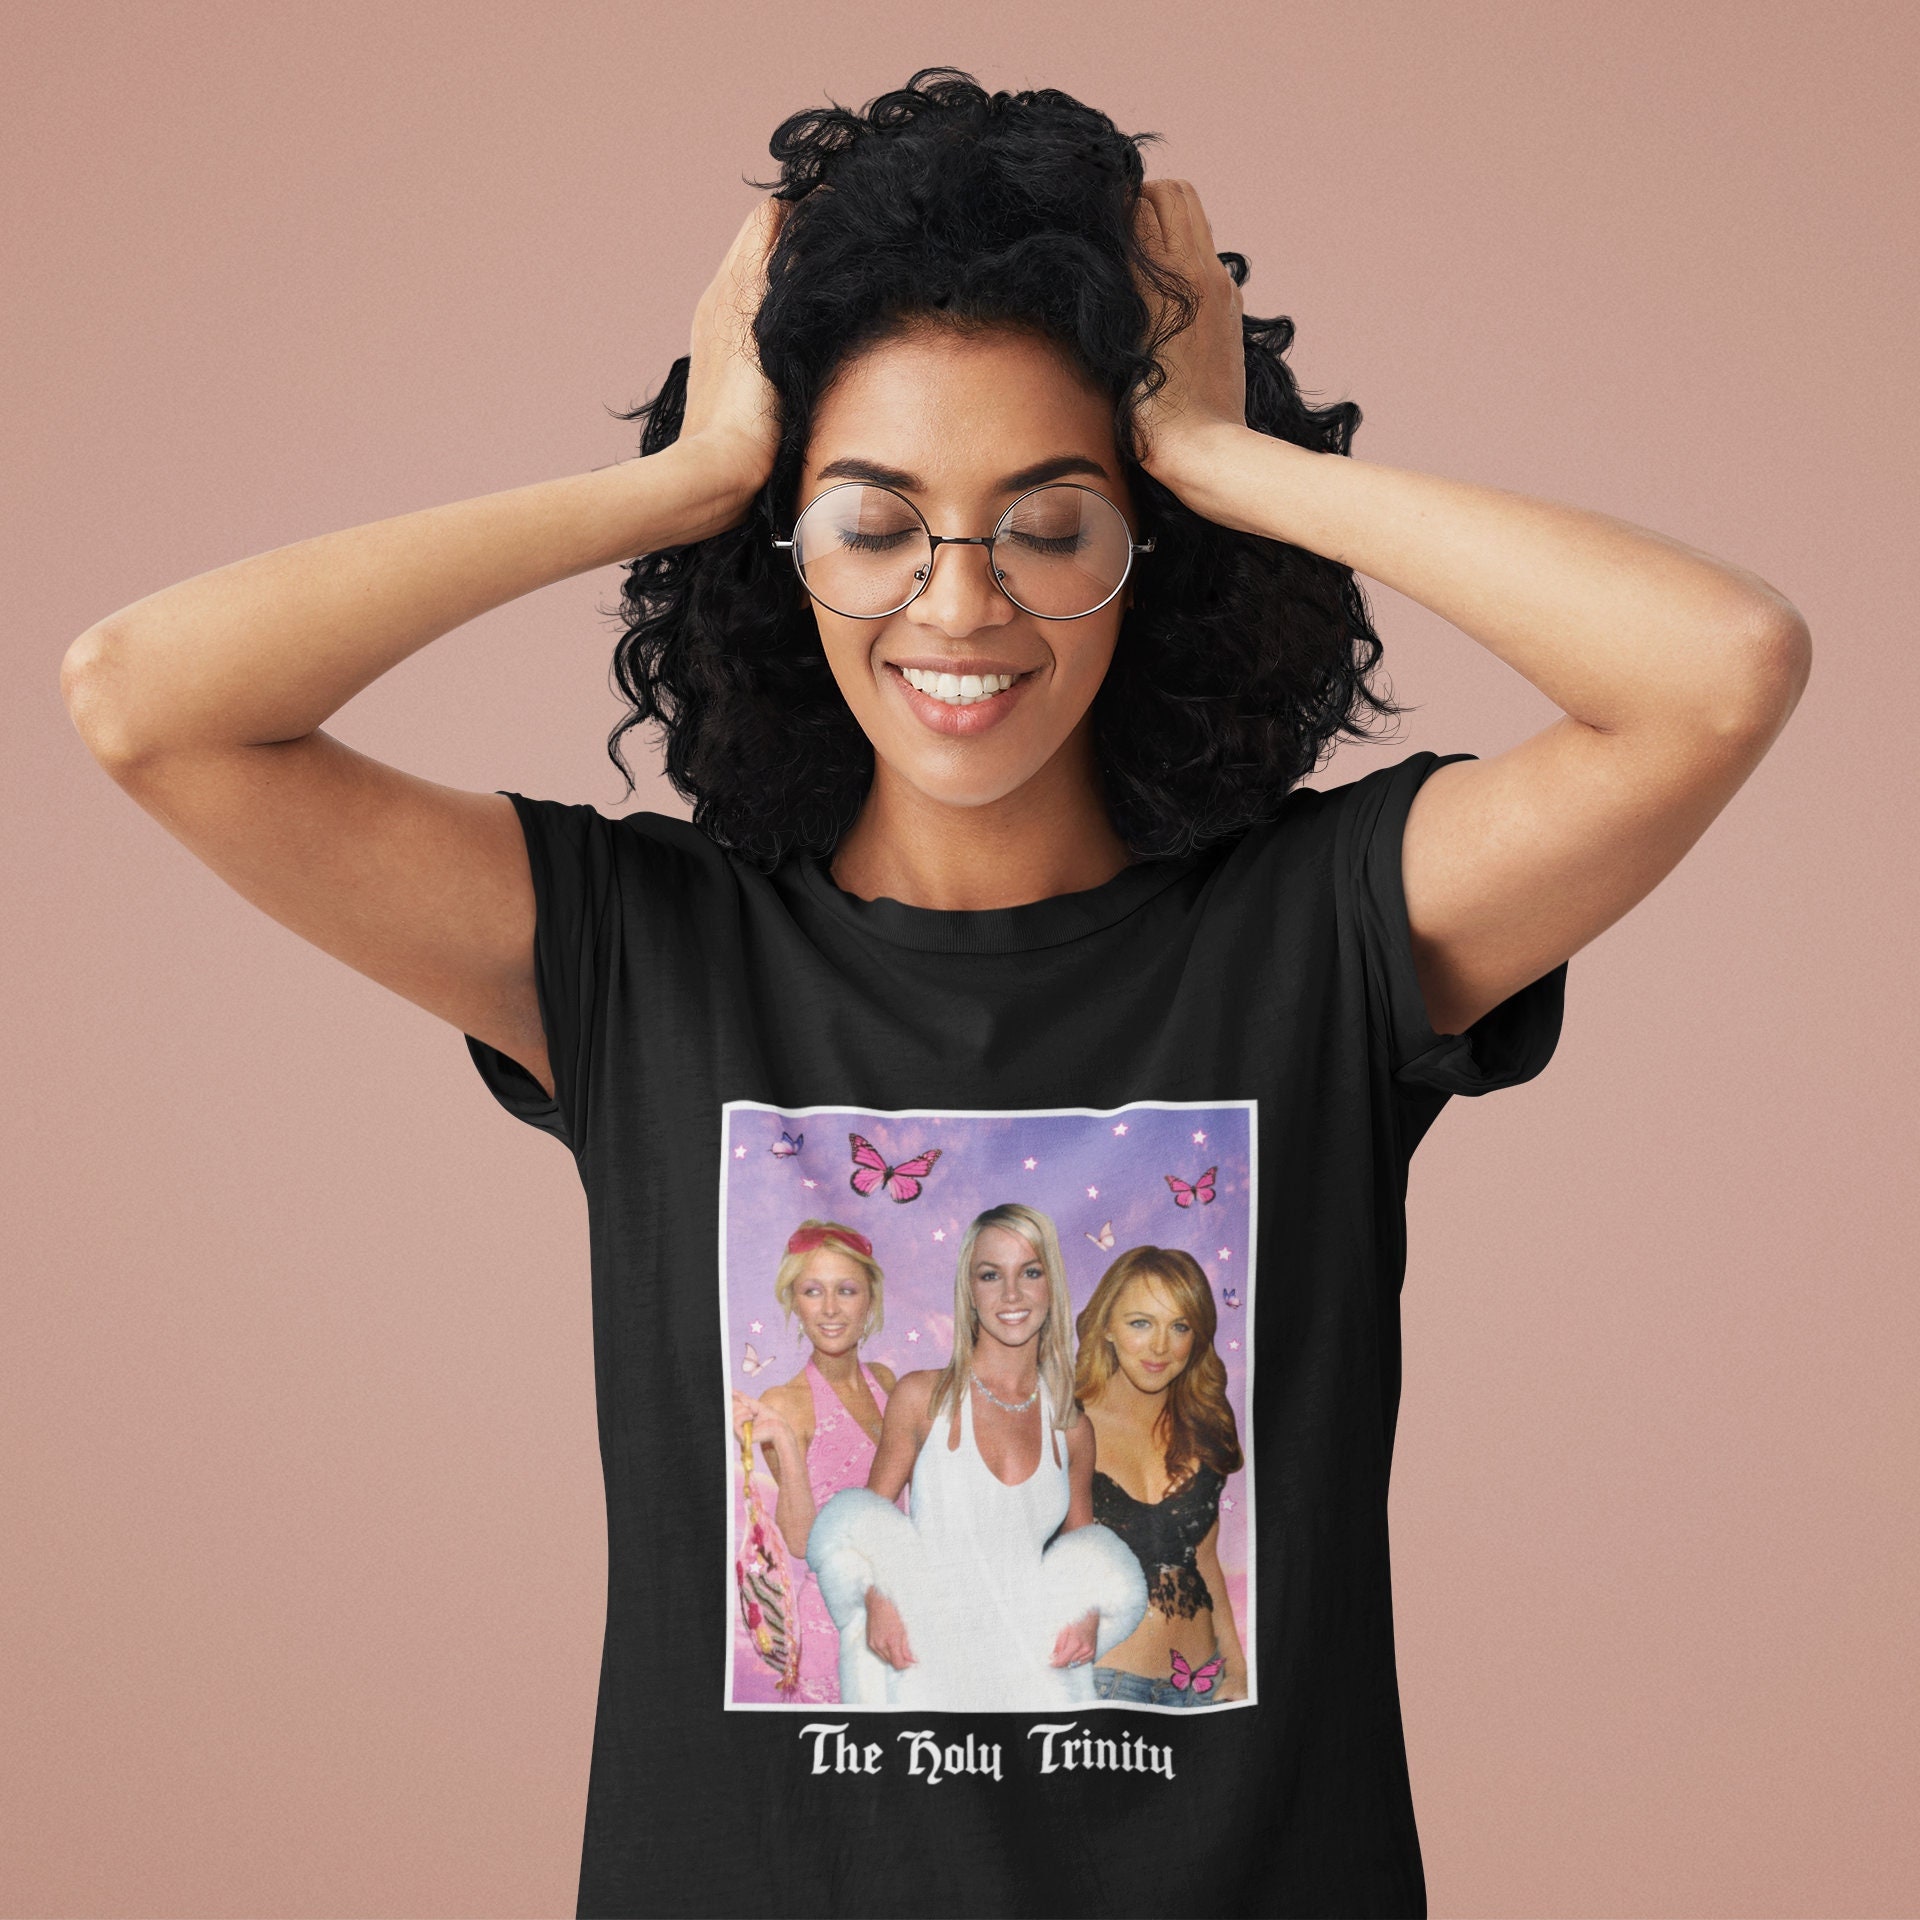 Discover The Holy Trinity - Paris Hilton, y2k T-Shirt